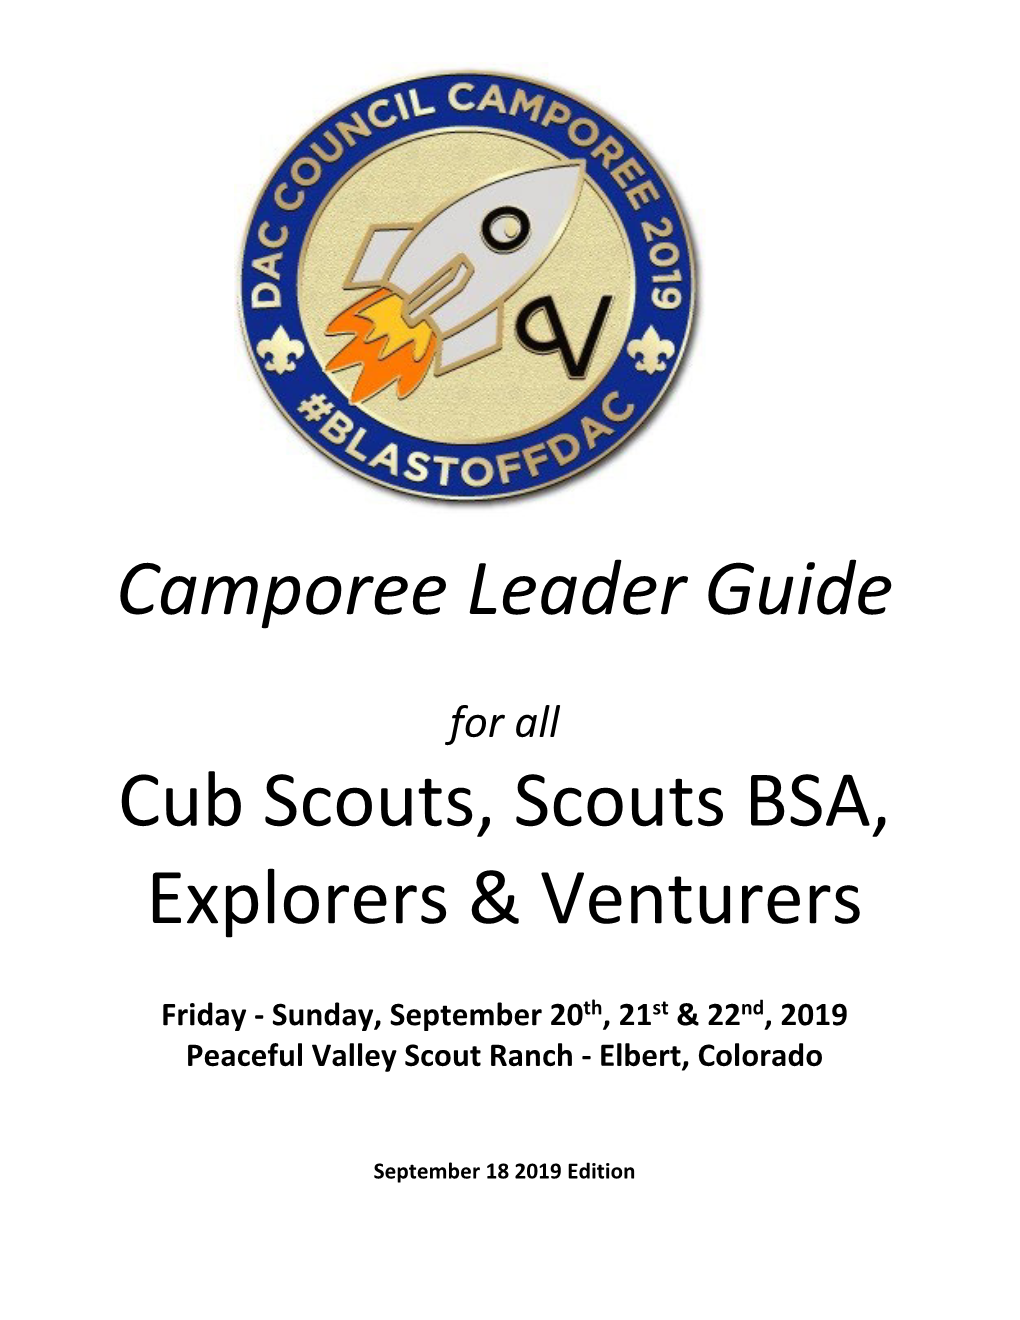 Camporee Leader Guide Cub Scouts, Scouts BSA, Explorers & Venturers